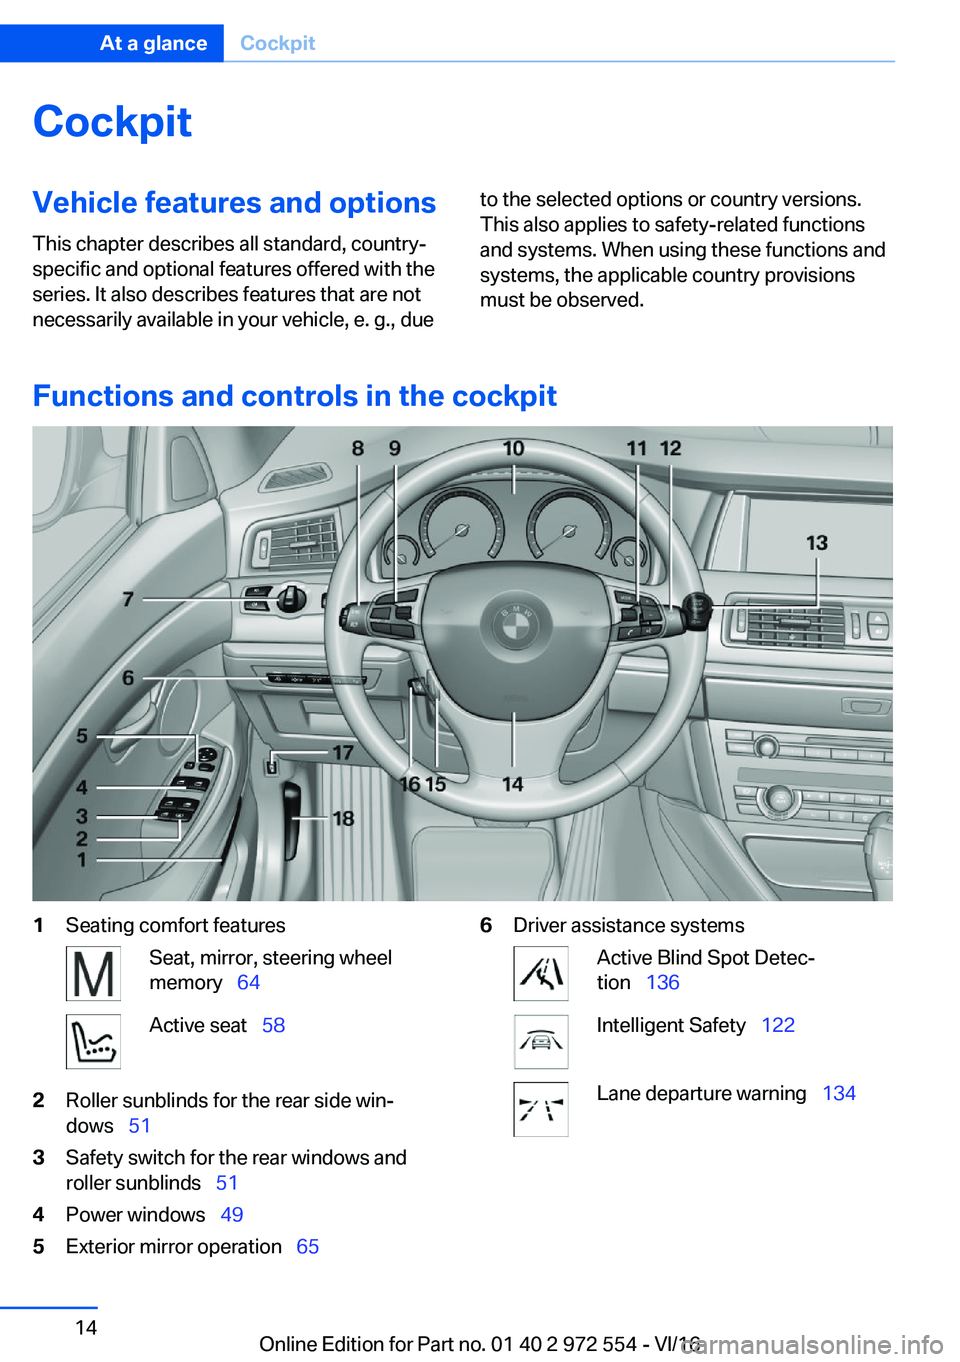 BMW 5 SERIES GRAN TURISMO 2017 User Guide �C�o�c�k�p�i�t�V�e�h�i�c�l�e��f�e�a�t�u�r�e�s��a�n�d��o�p�t�i�o�n�s
�T�h�i�s� �c�h�a�p�t�e�r� �d�e�s�c�r�i�b�e�s� �a�l�l� �s�t�a�n�d�a�r�d�,� �c�o�u�n�t�r�y�- �s�p�e�c�i�f�i�c� �a�n�d� �o�p�t�i�o�n